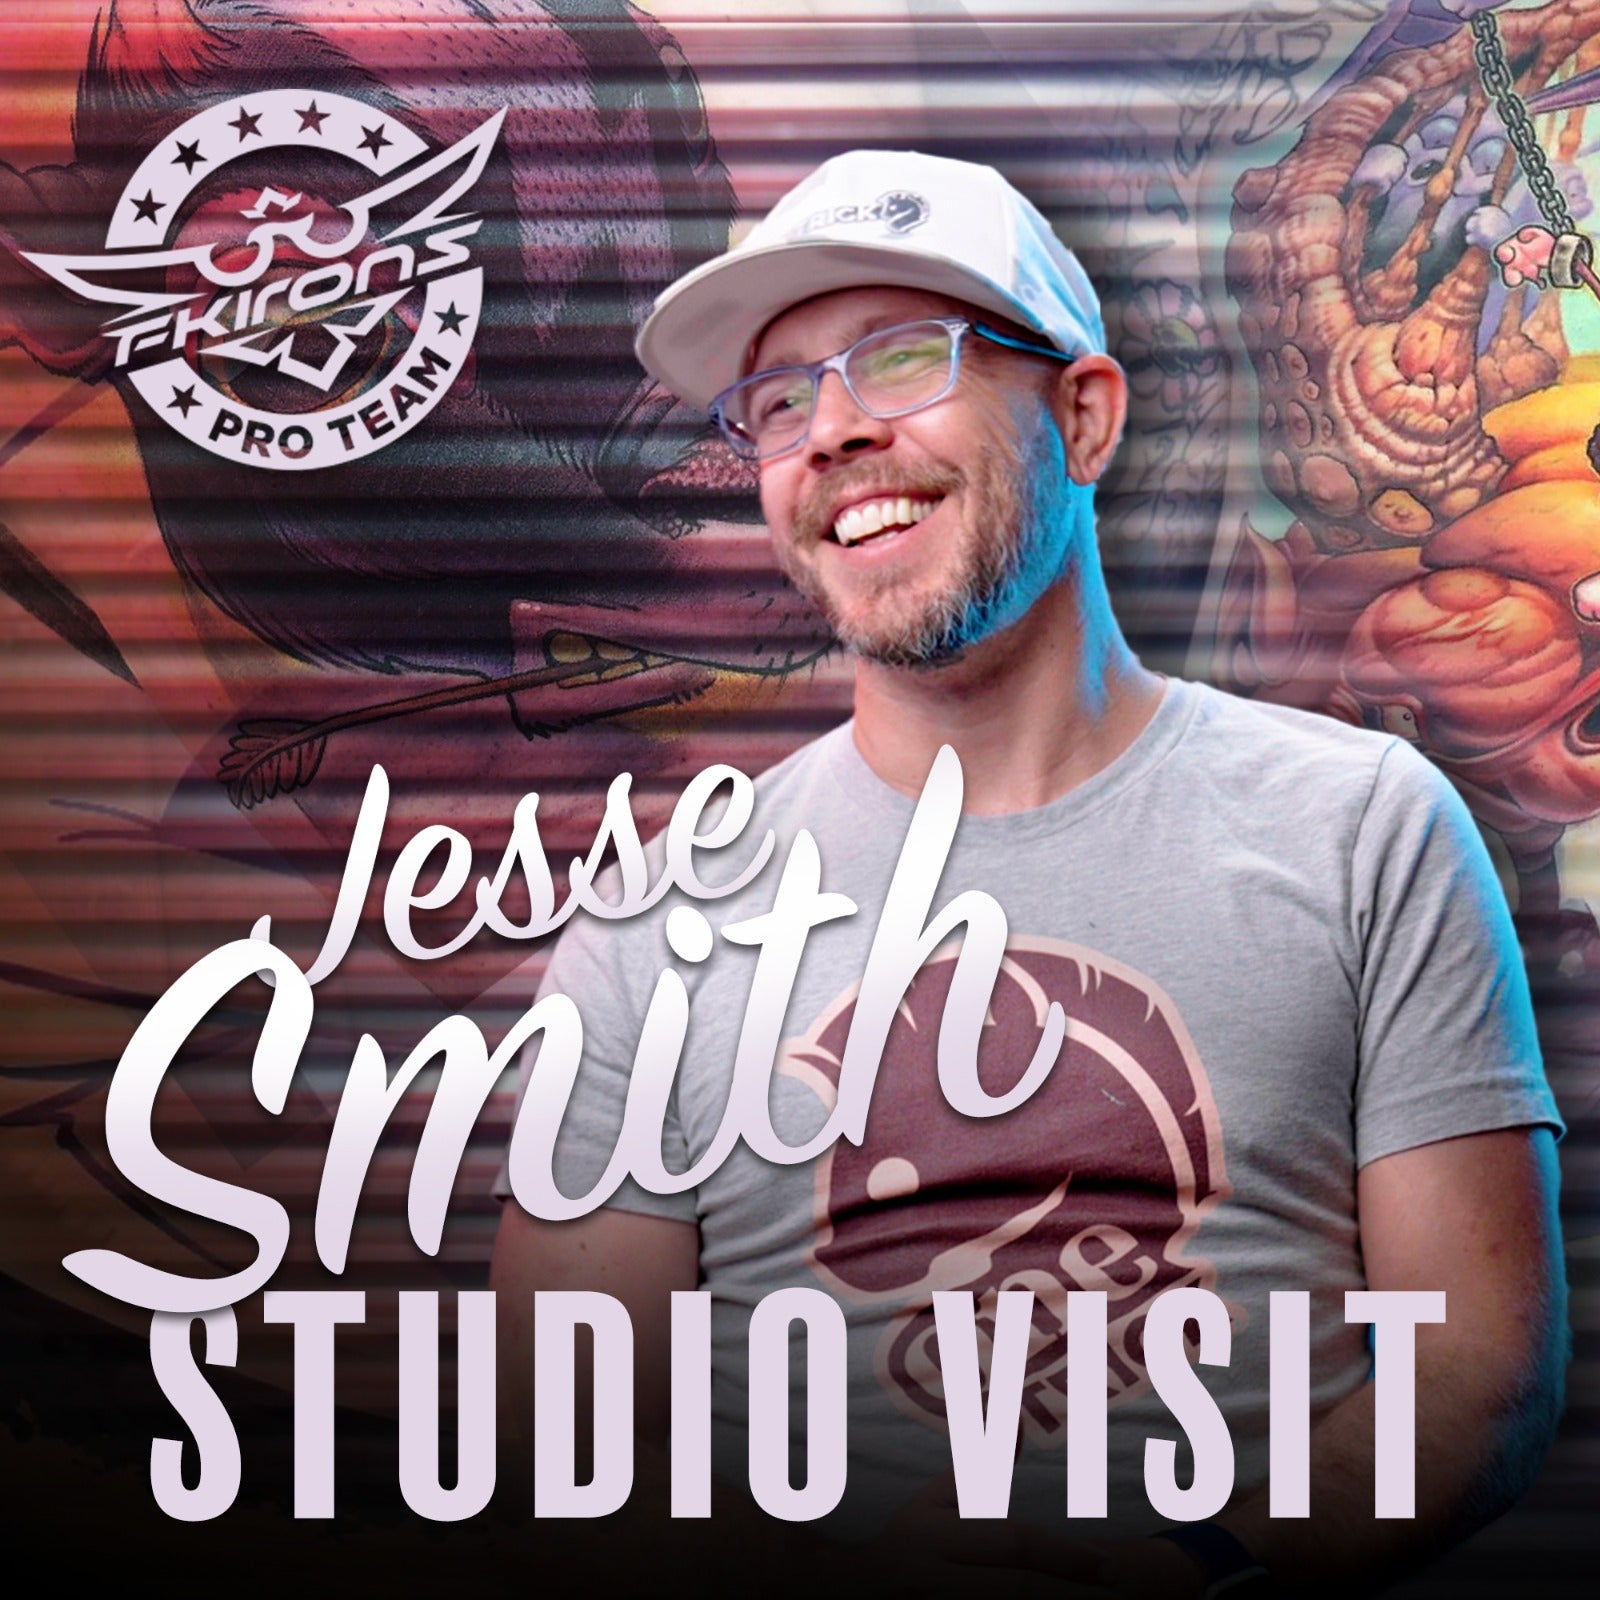 FK Irons Pro Team Artist Jesse Smith Studio Visit